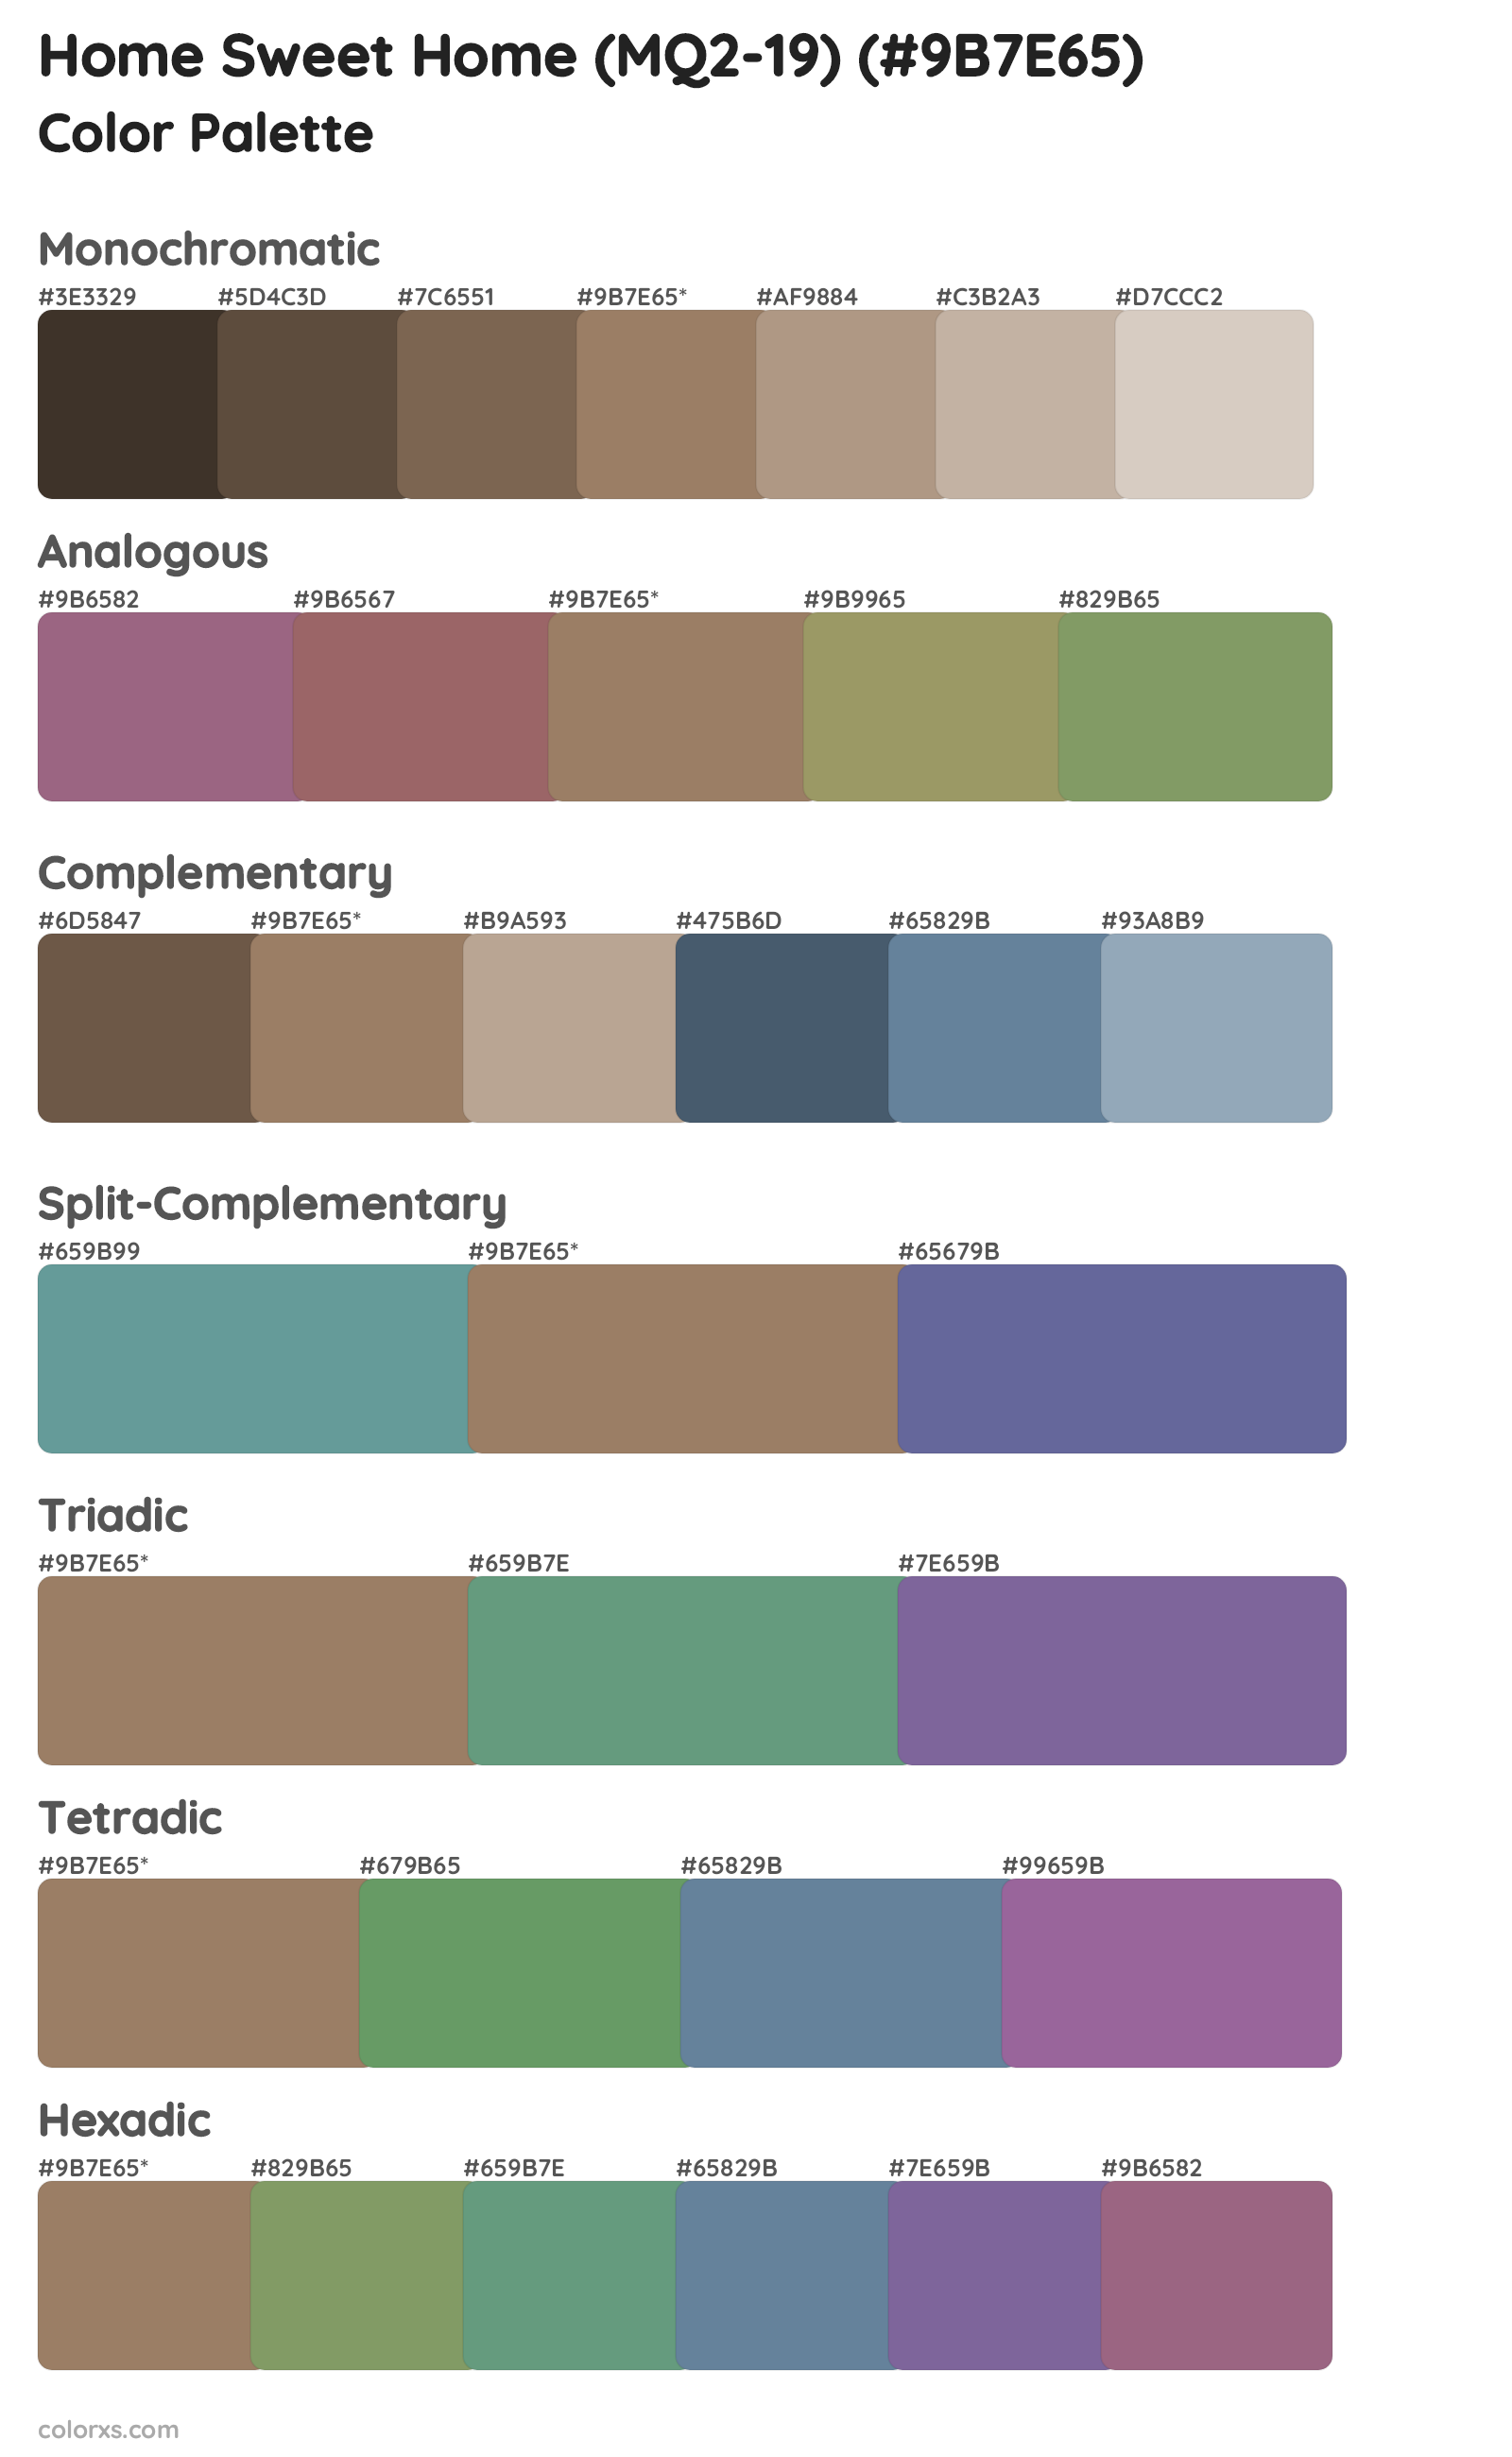 Home Sweet Home (MQ2-19) Color Scheme Palettes